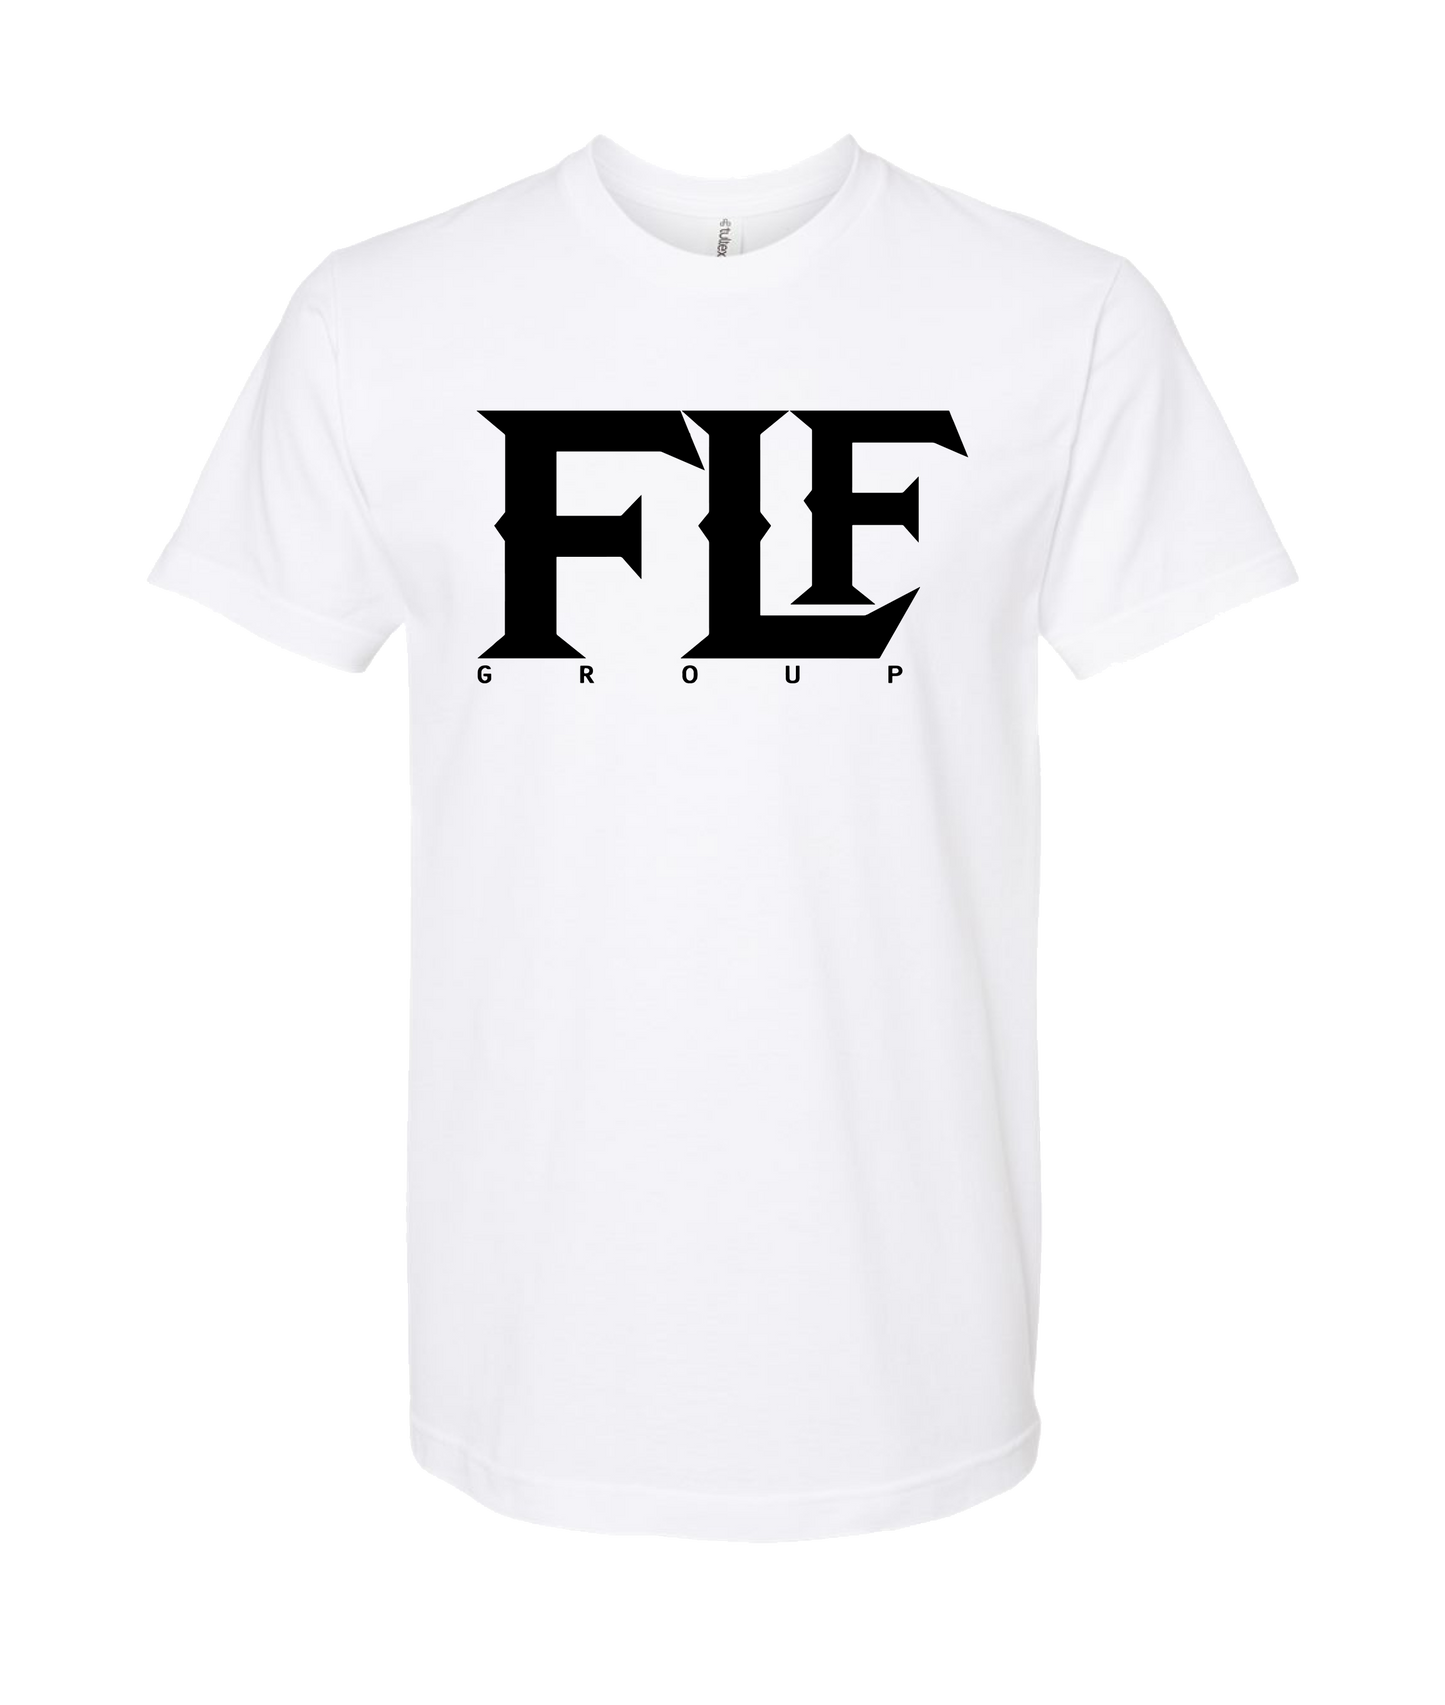 Armani_OD - FLF Group Logo - White T Shirt